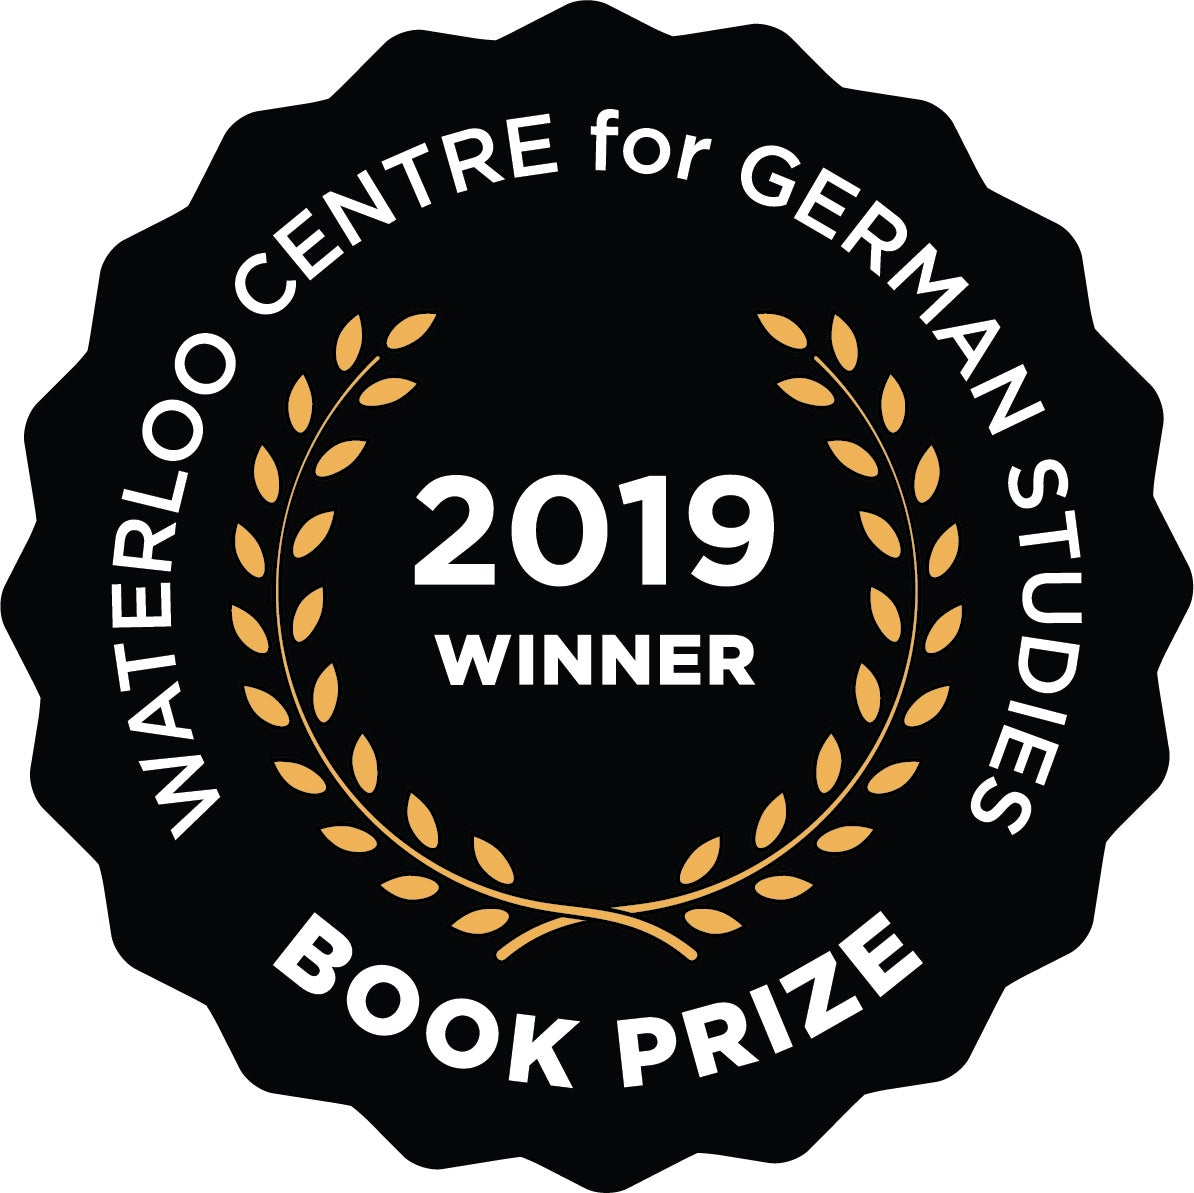 2019 Book Prize Winner logo